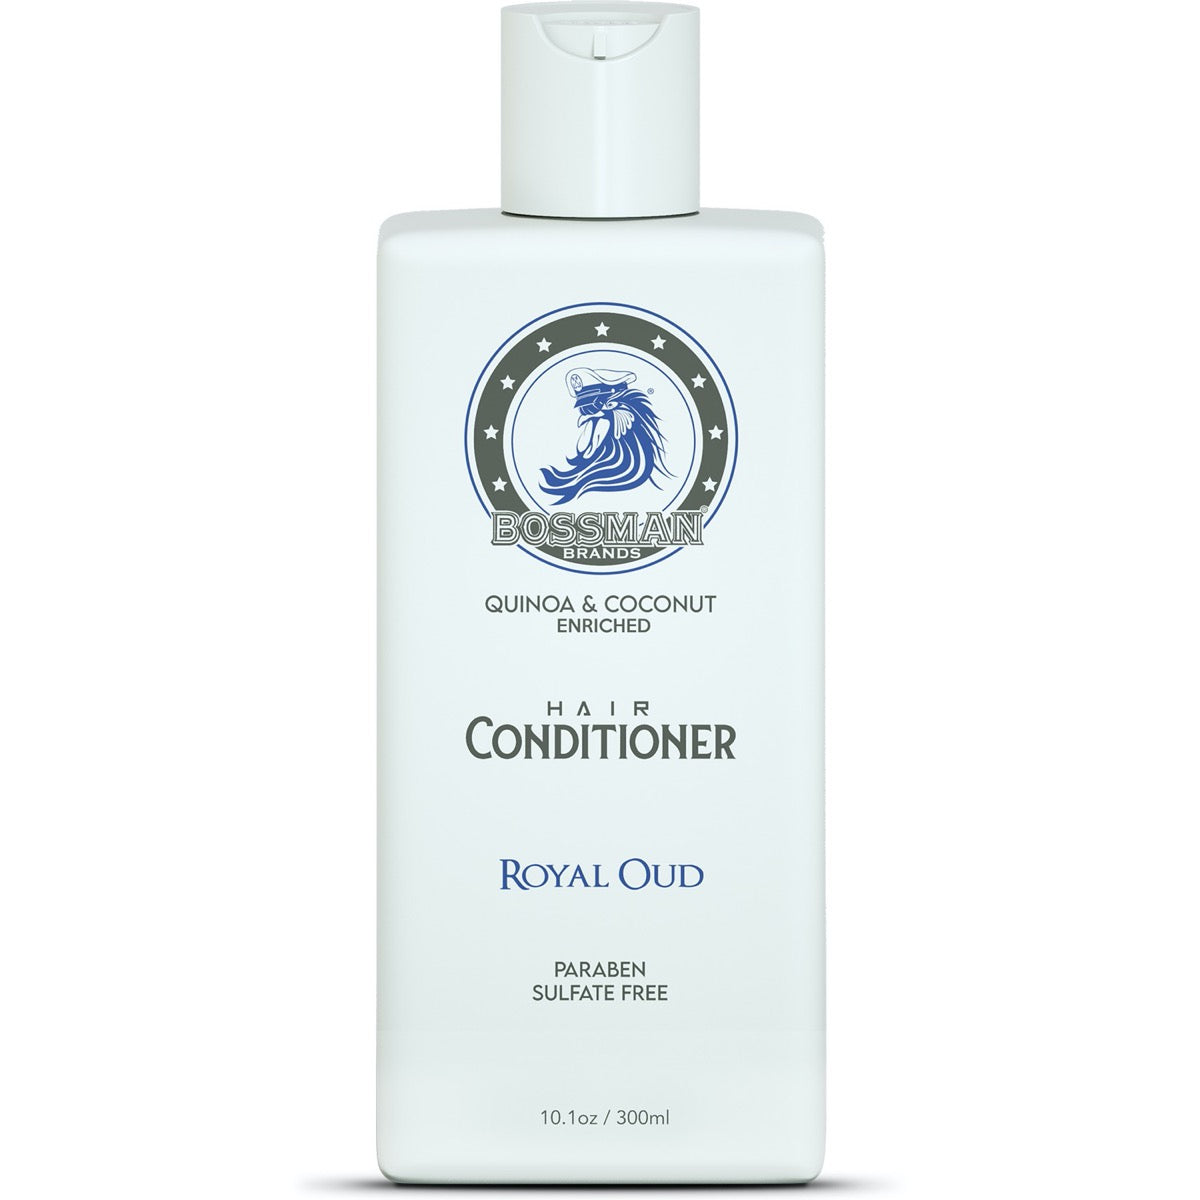 Hair Shampoo & Conditioner Bossman Brands